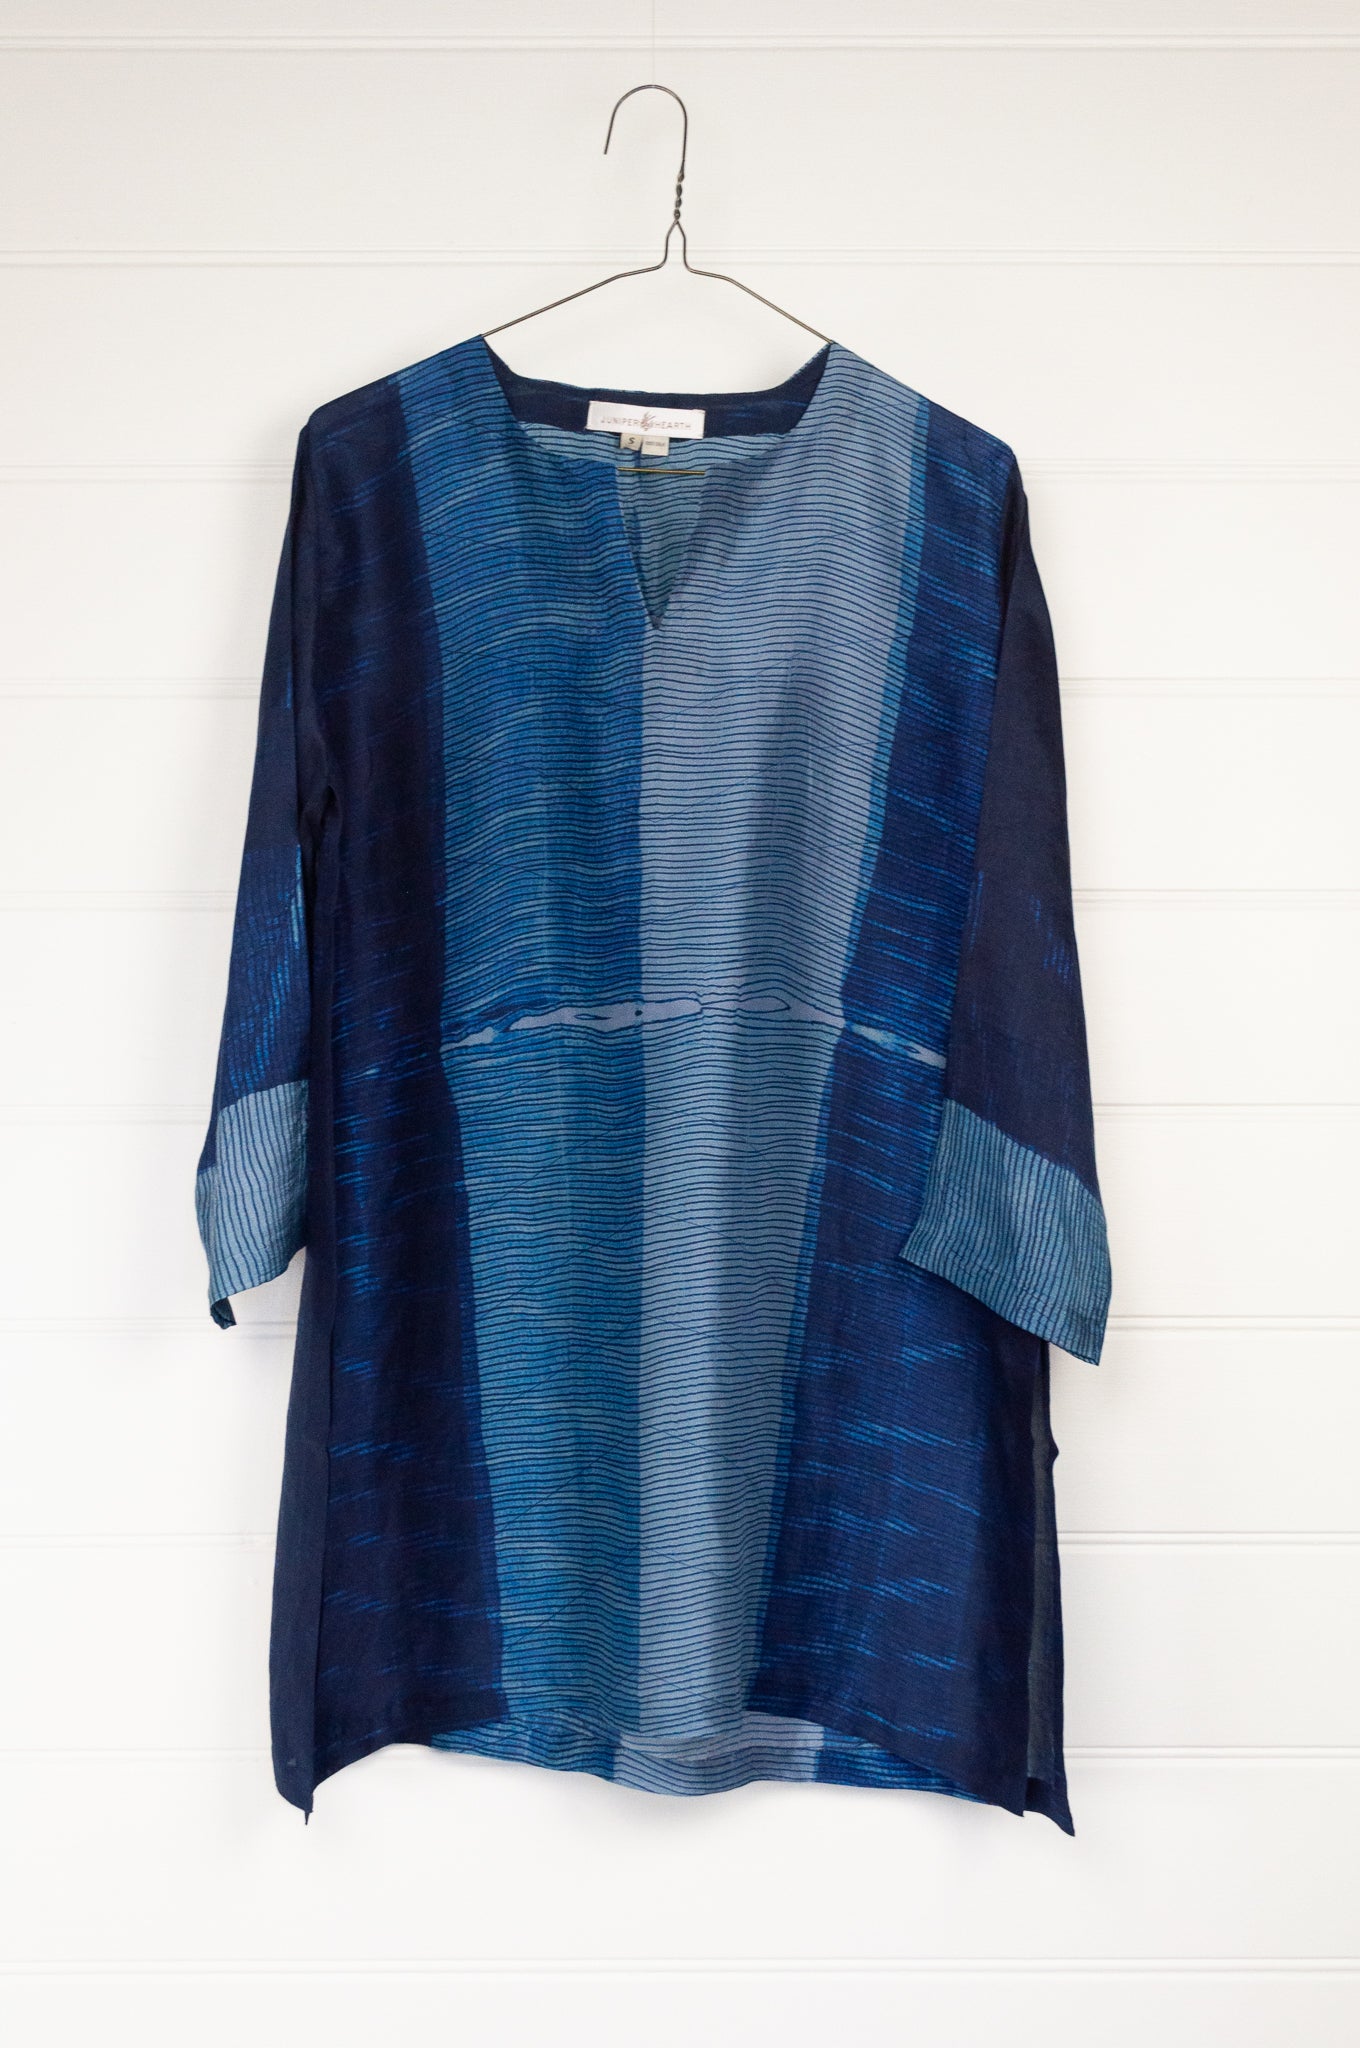 Pure silk shibori dyed silk kurta top in shades of indigo.